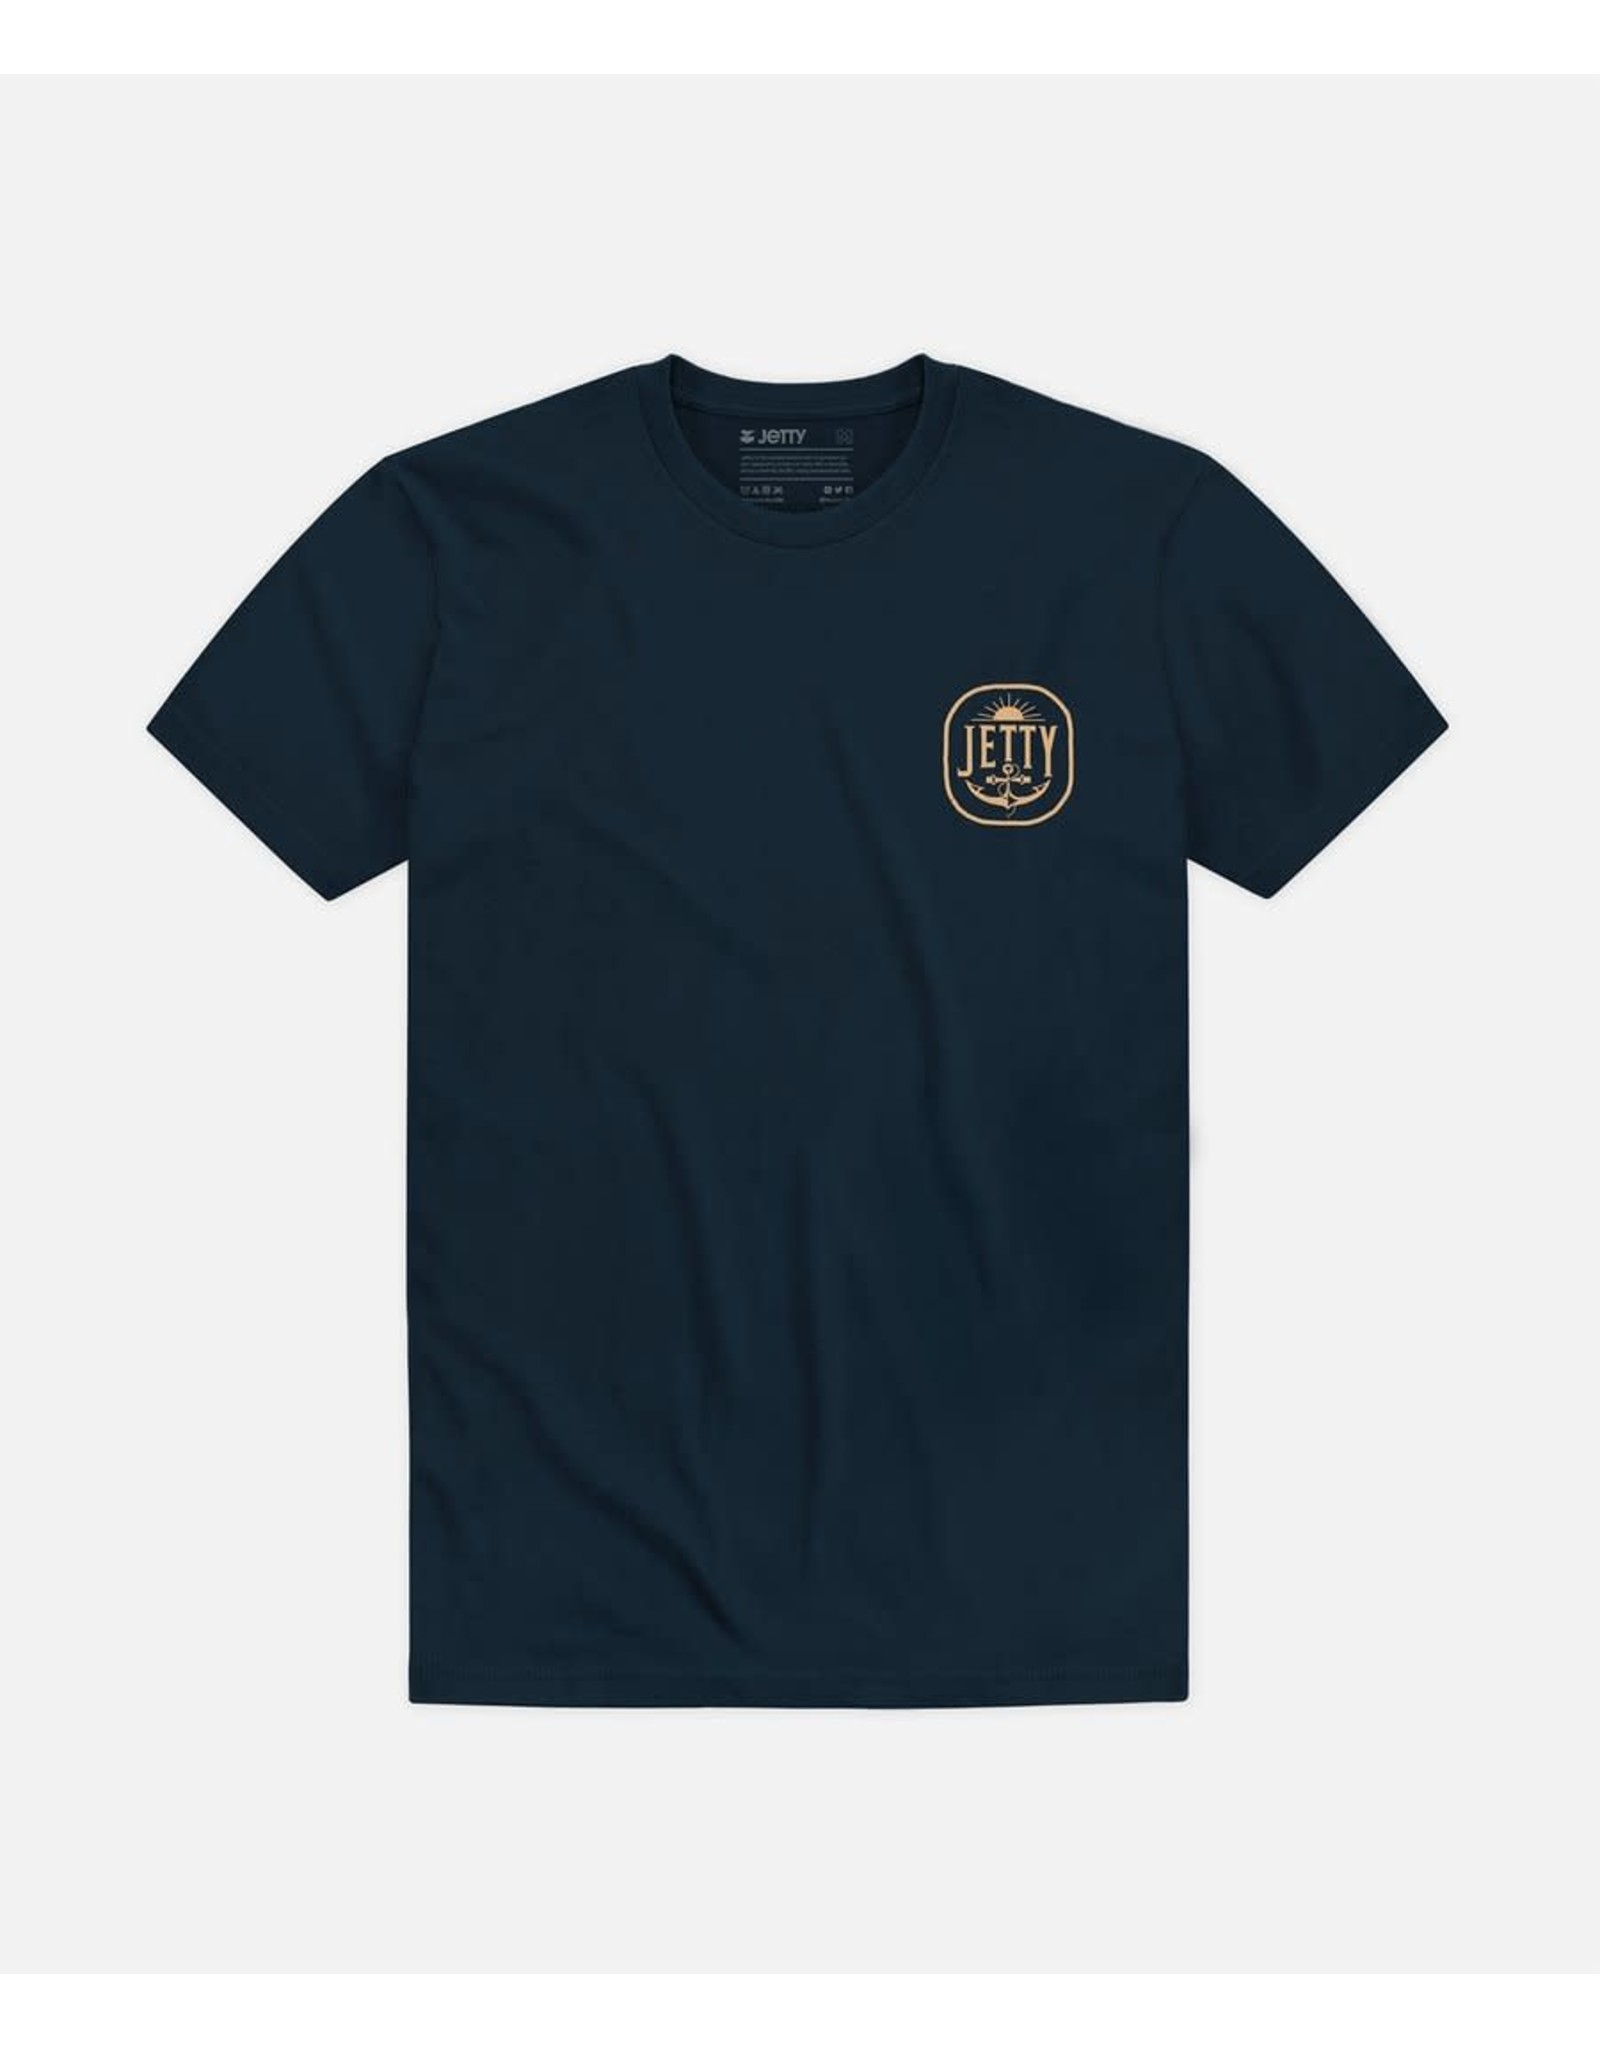 Jetty Admirality T-Shirt